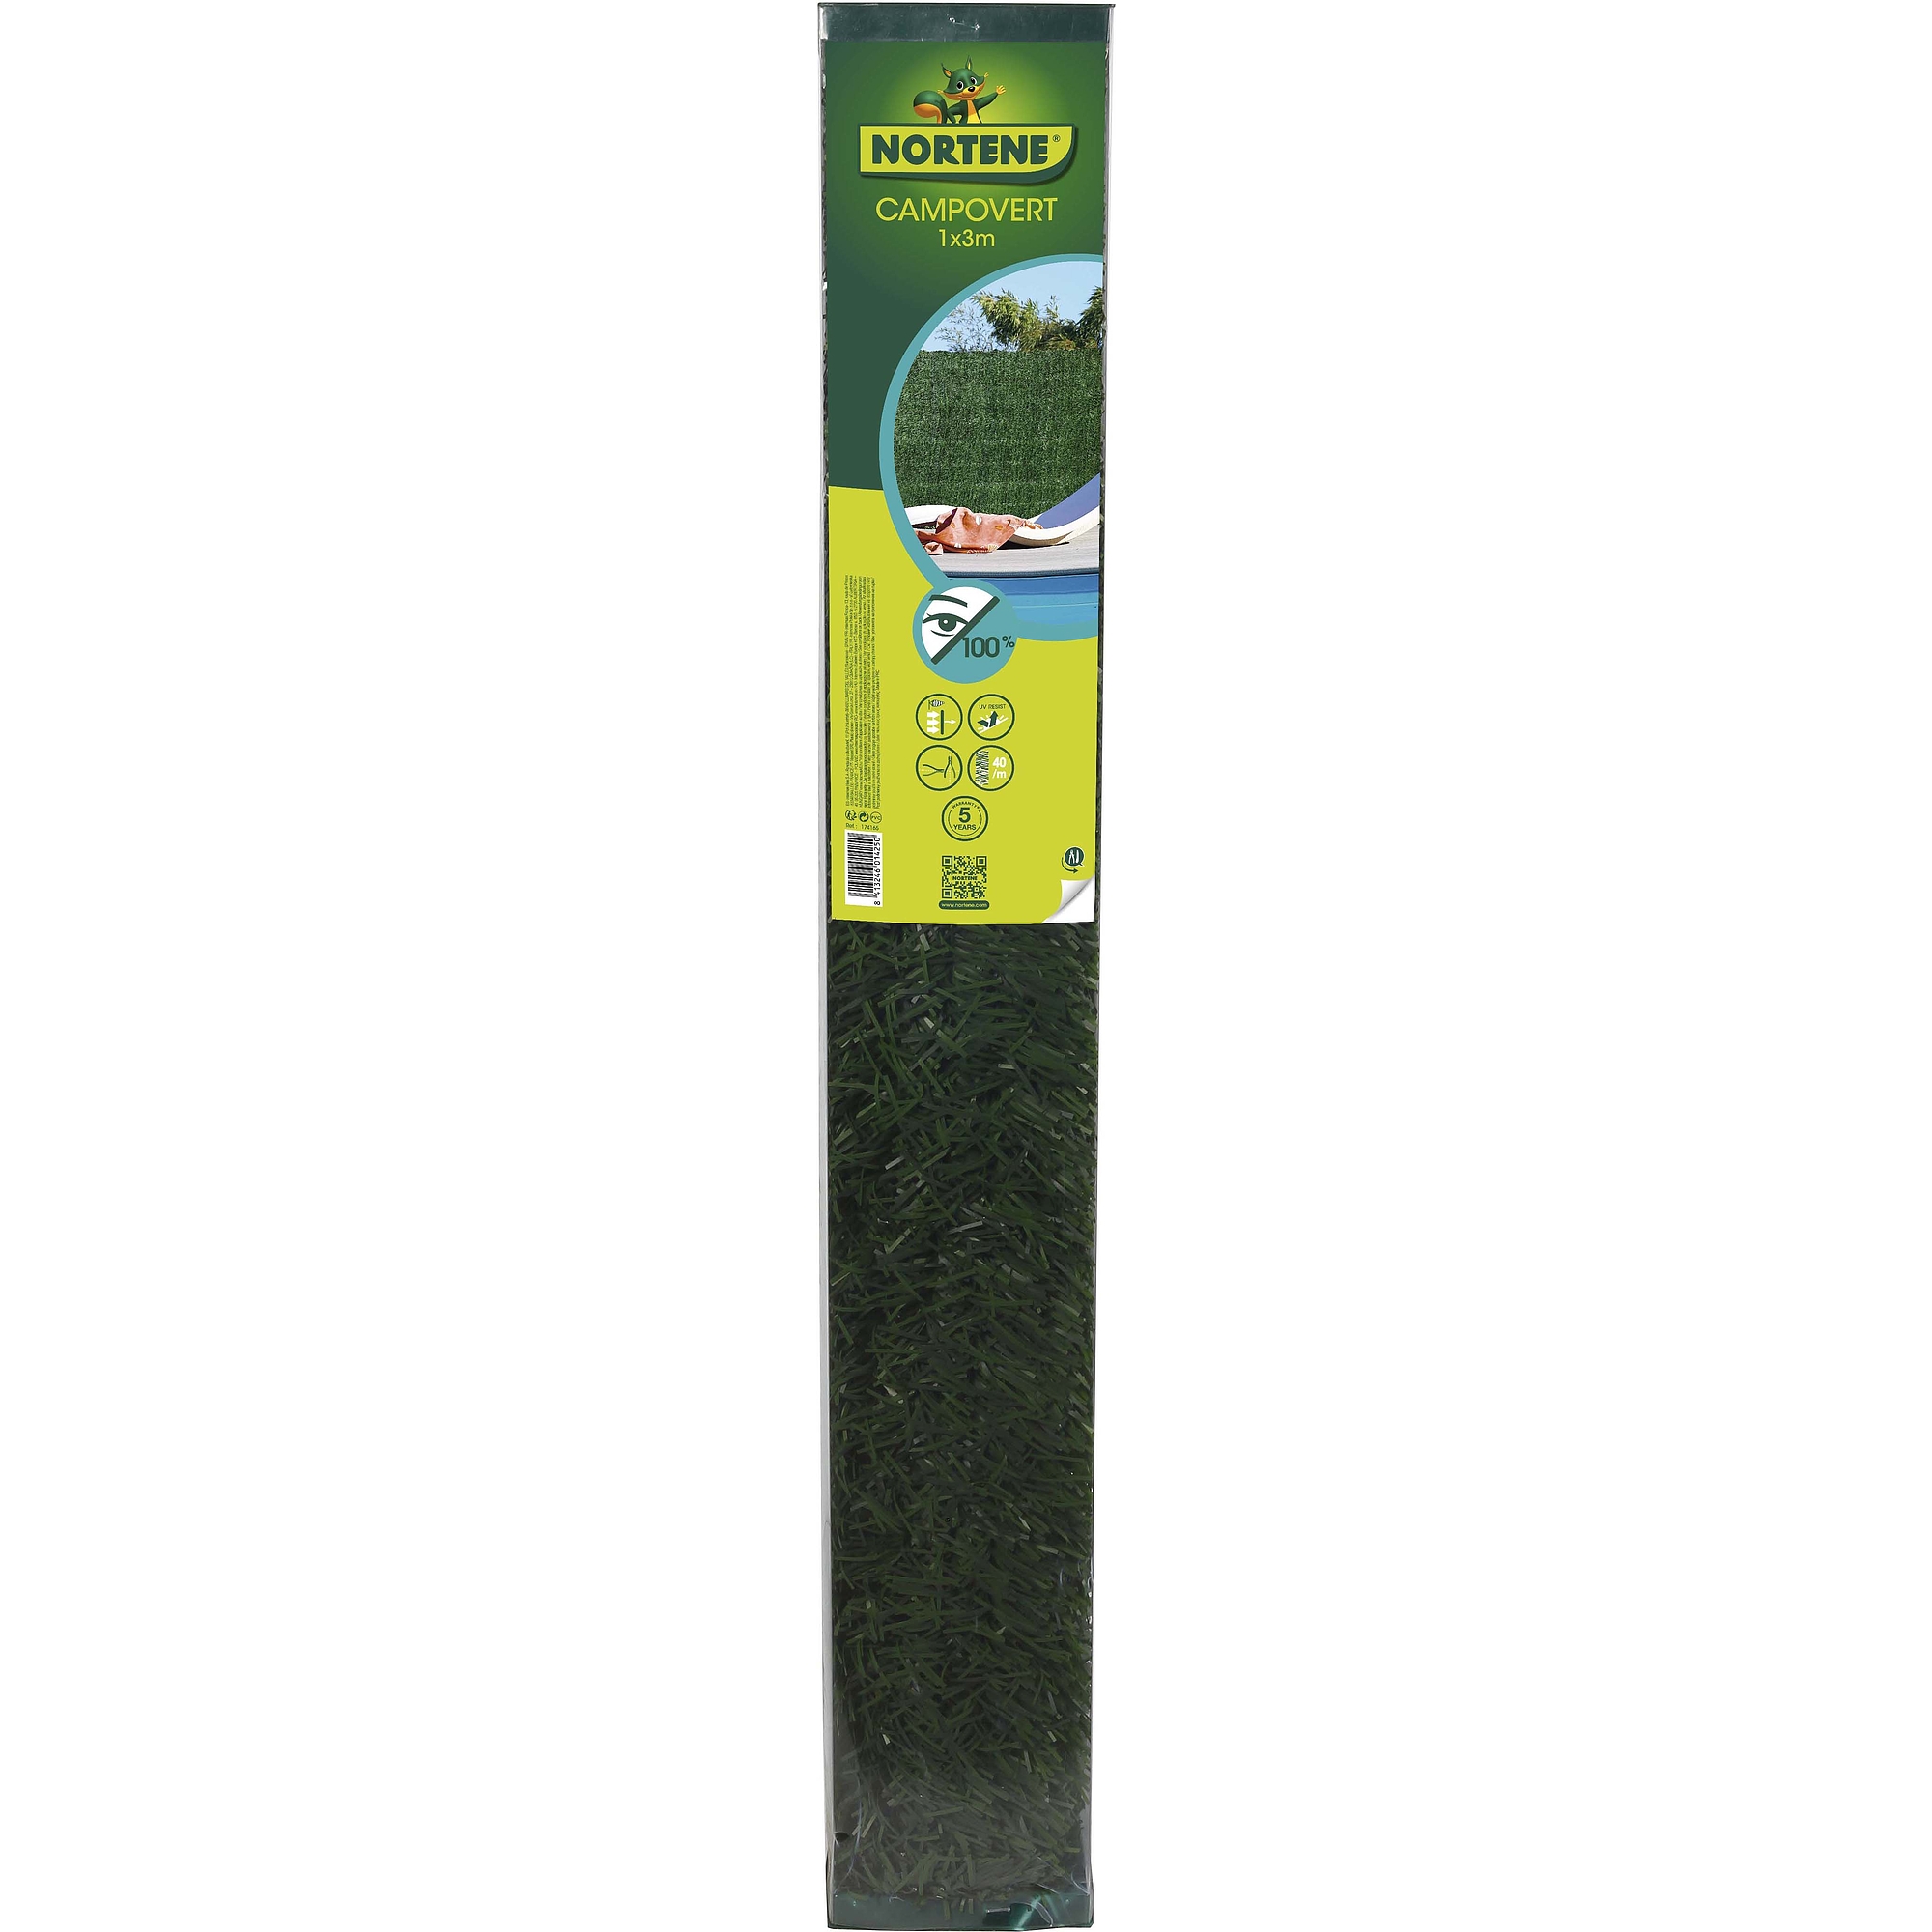 Nortene CAMPOVERT műsövény 100% - 1 x 3 m -  zöld - 174165